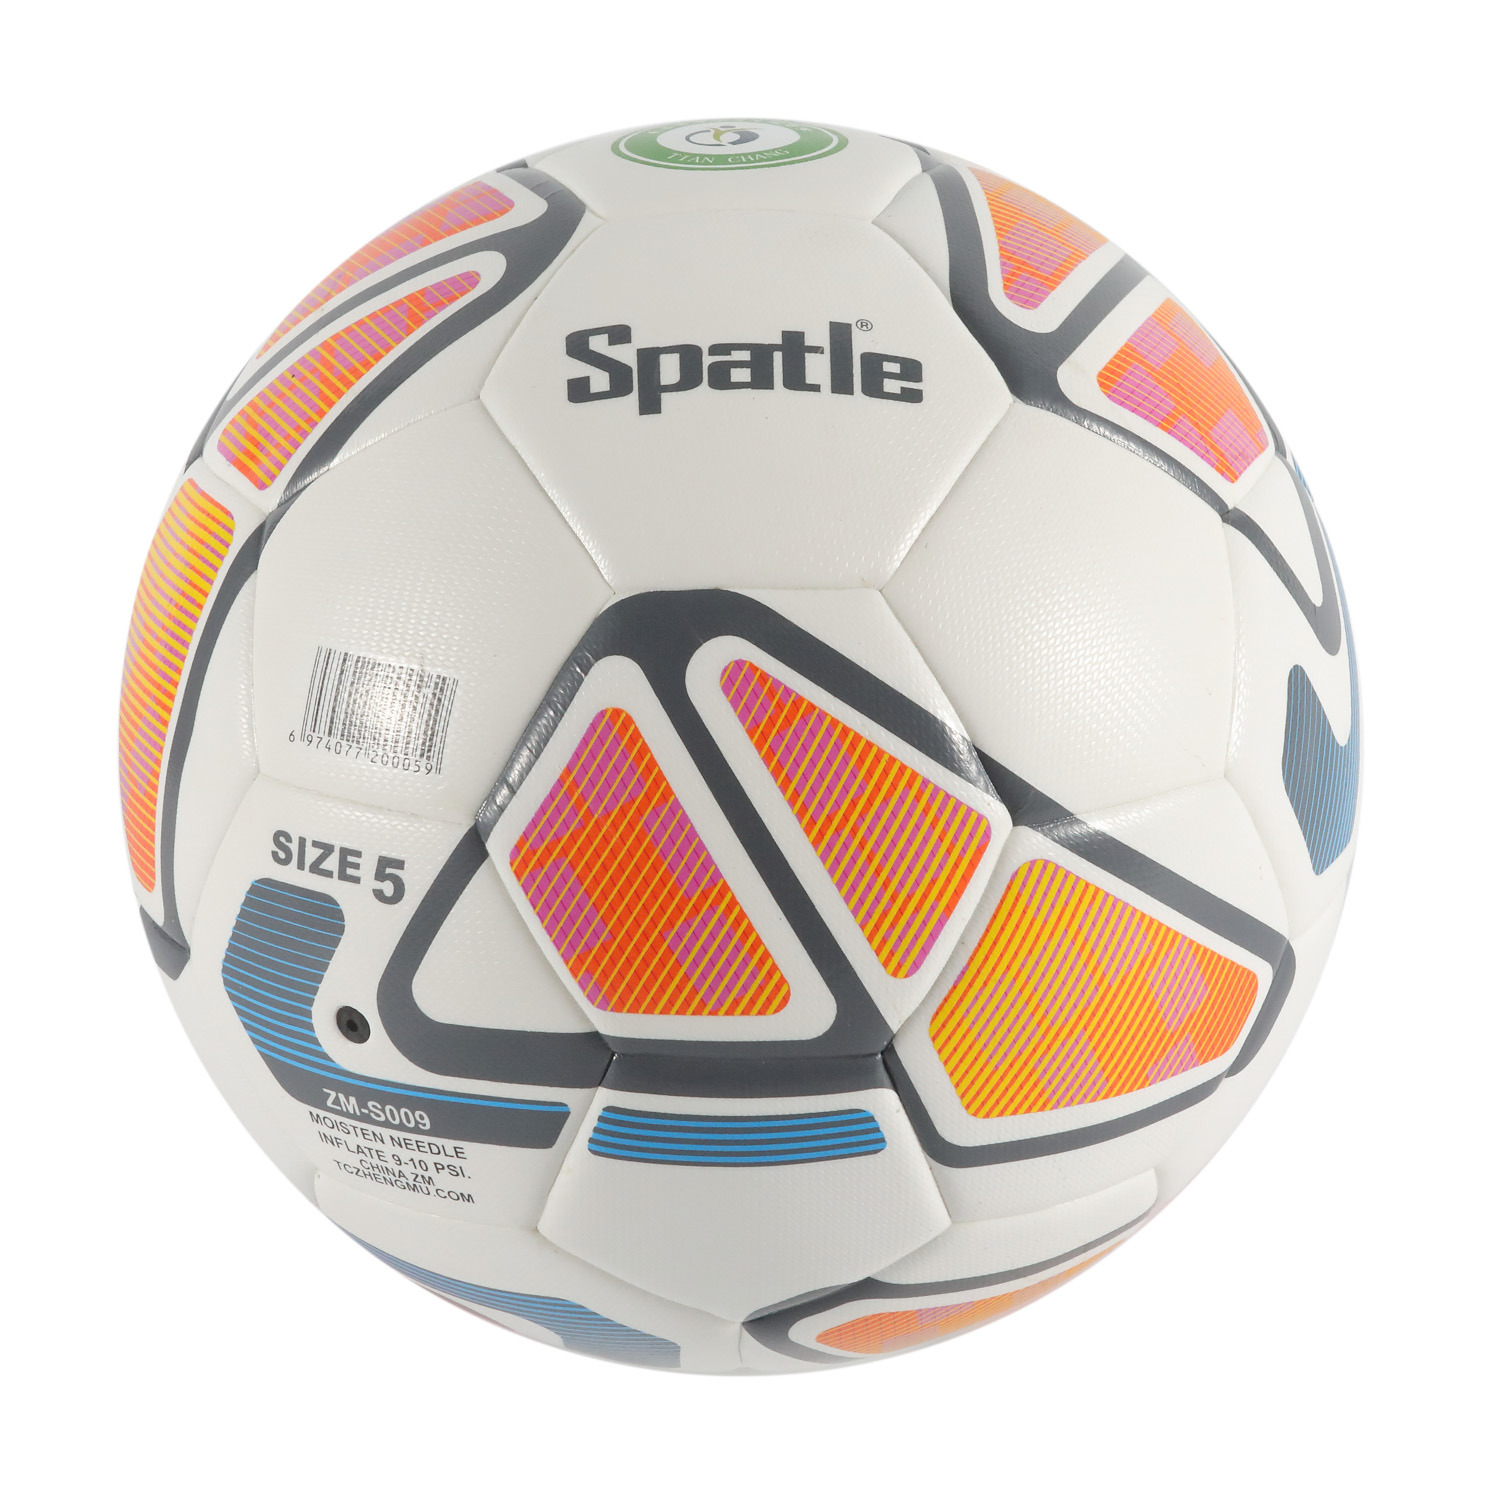 पदोन्नति उपहार मशीन-सिले फुटबॉल/सॉकर कस्टम लोगो बॉल्स